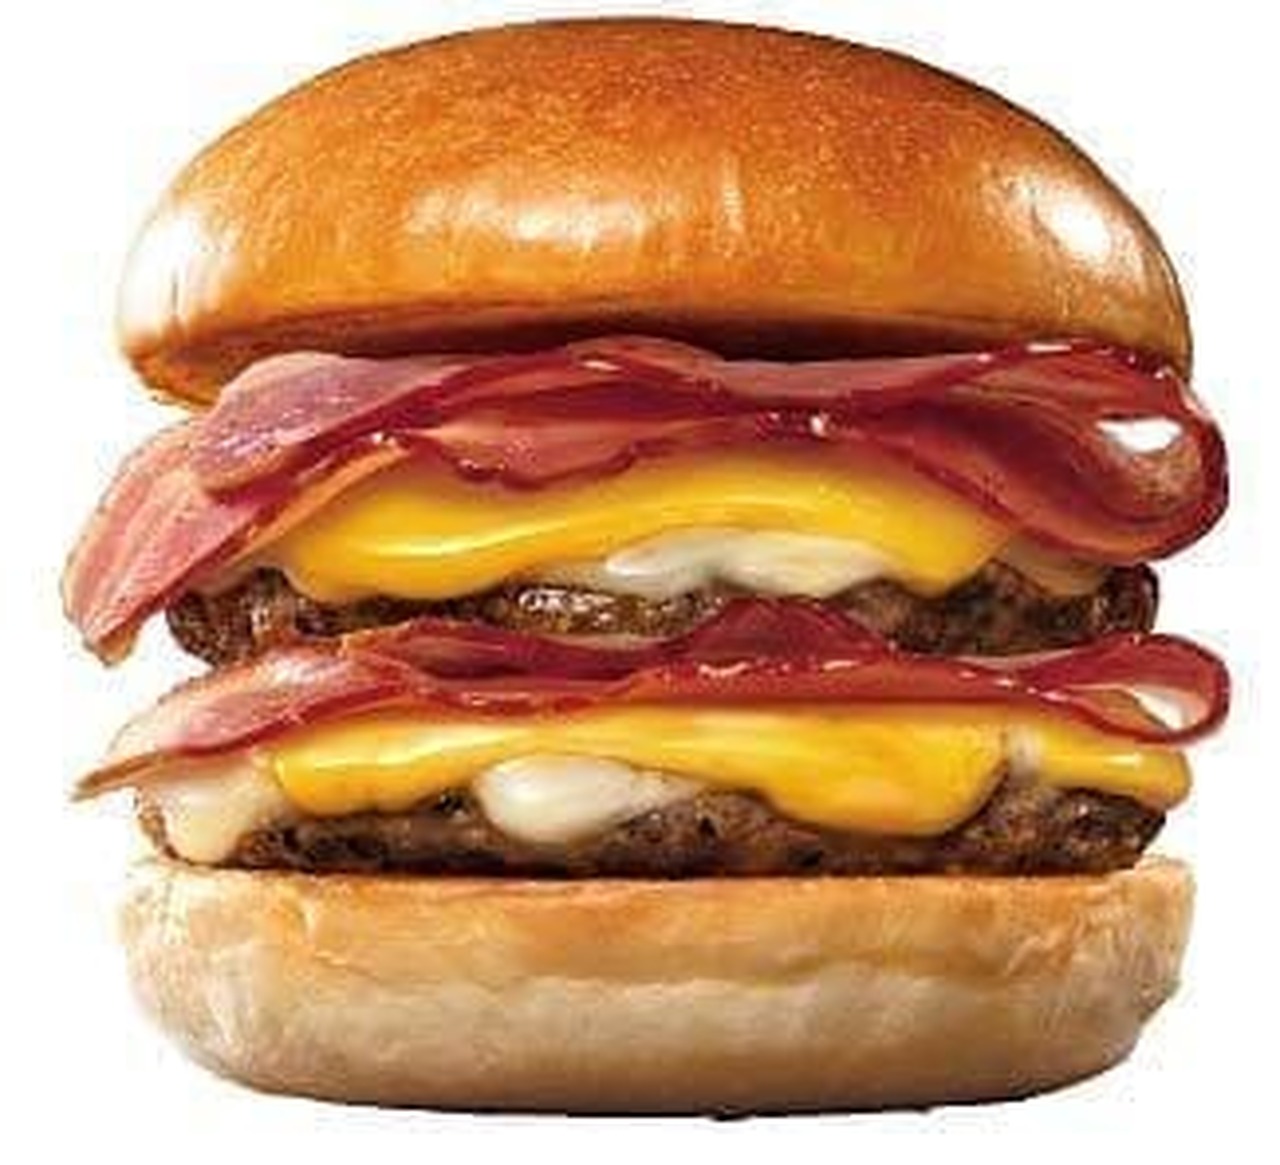 Lotteria "Double Bacon Double Exquisite Cheeseburger"